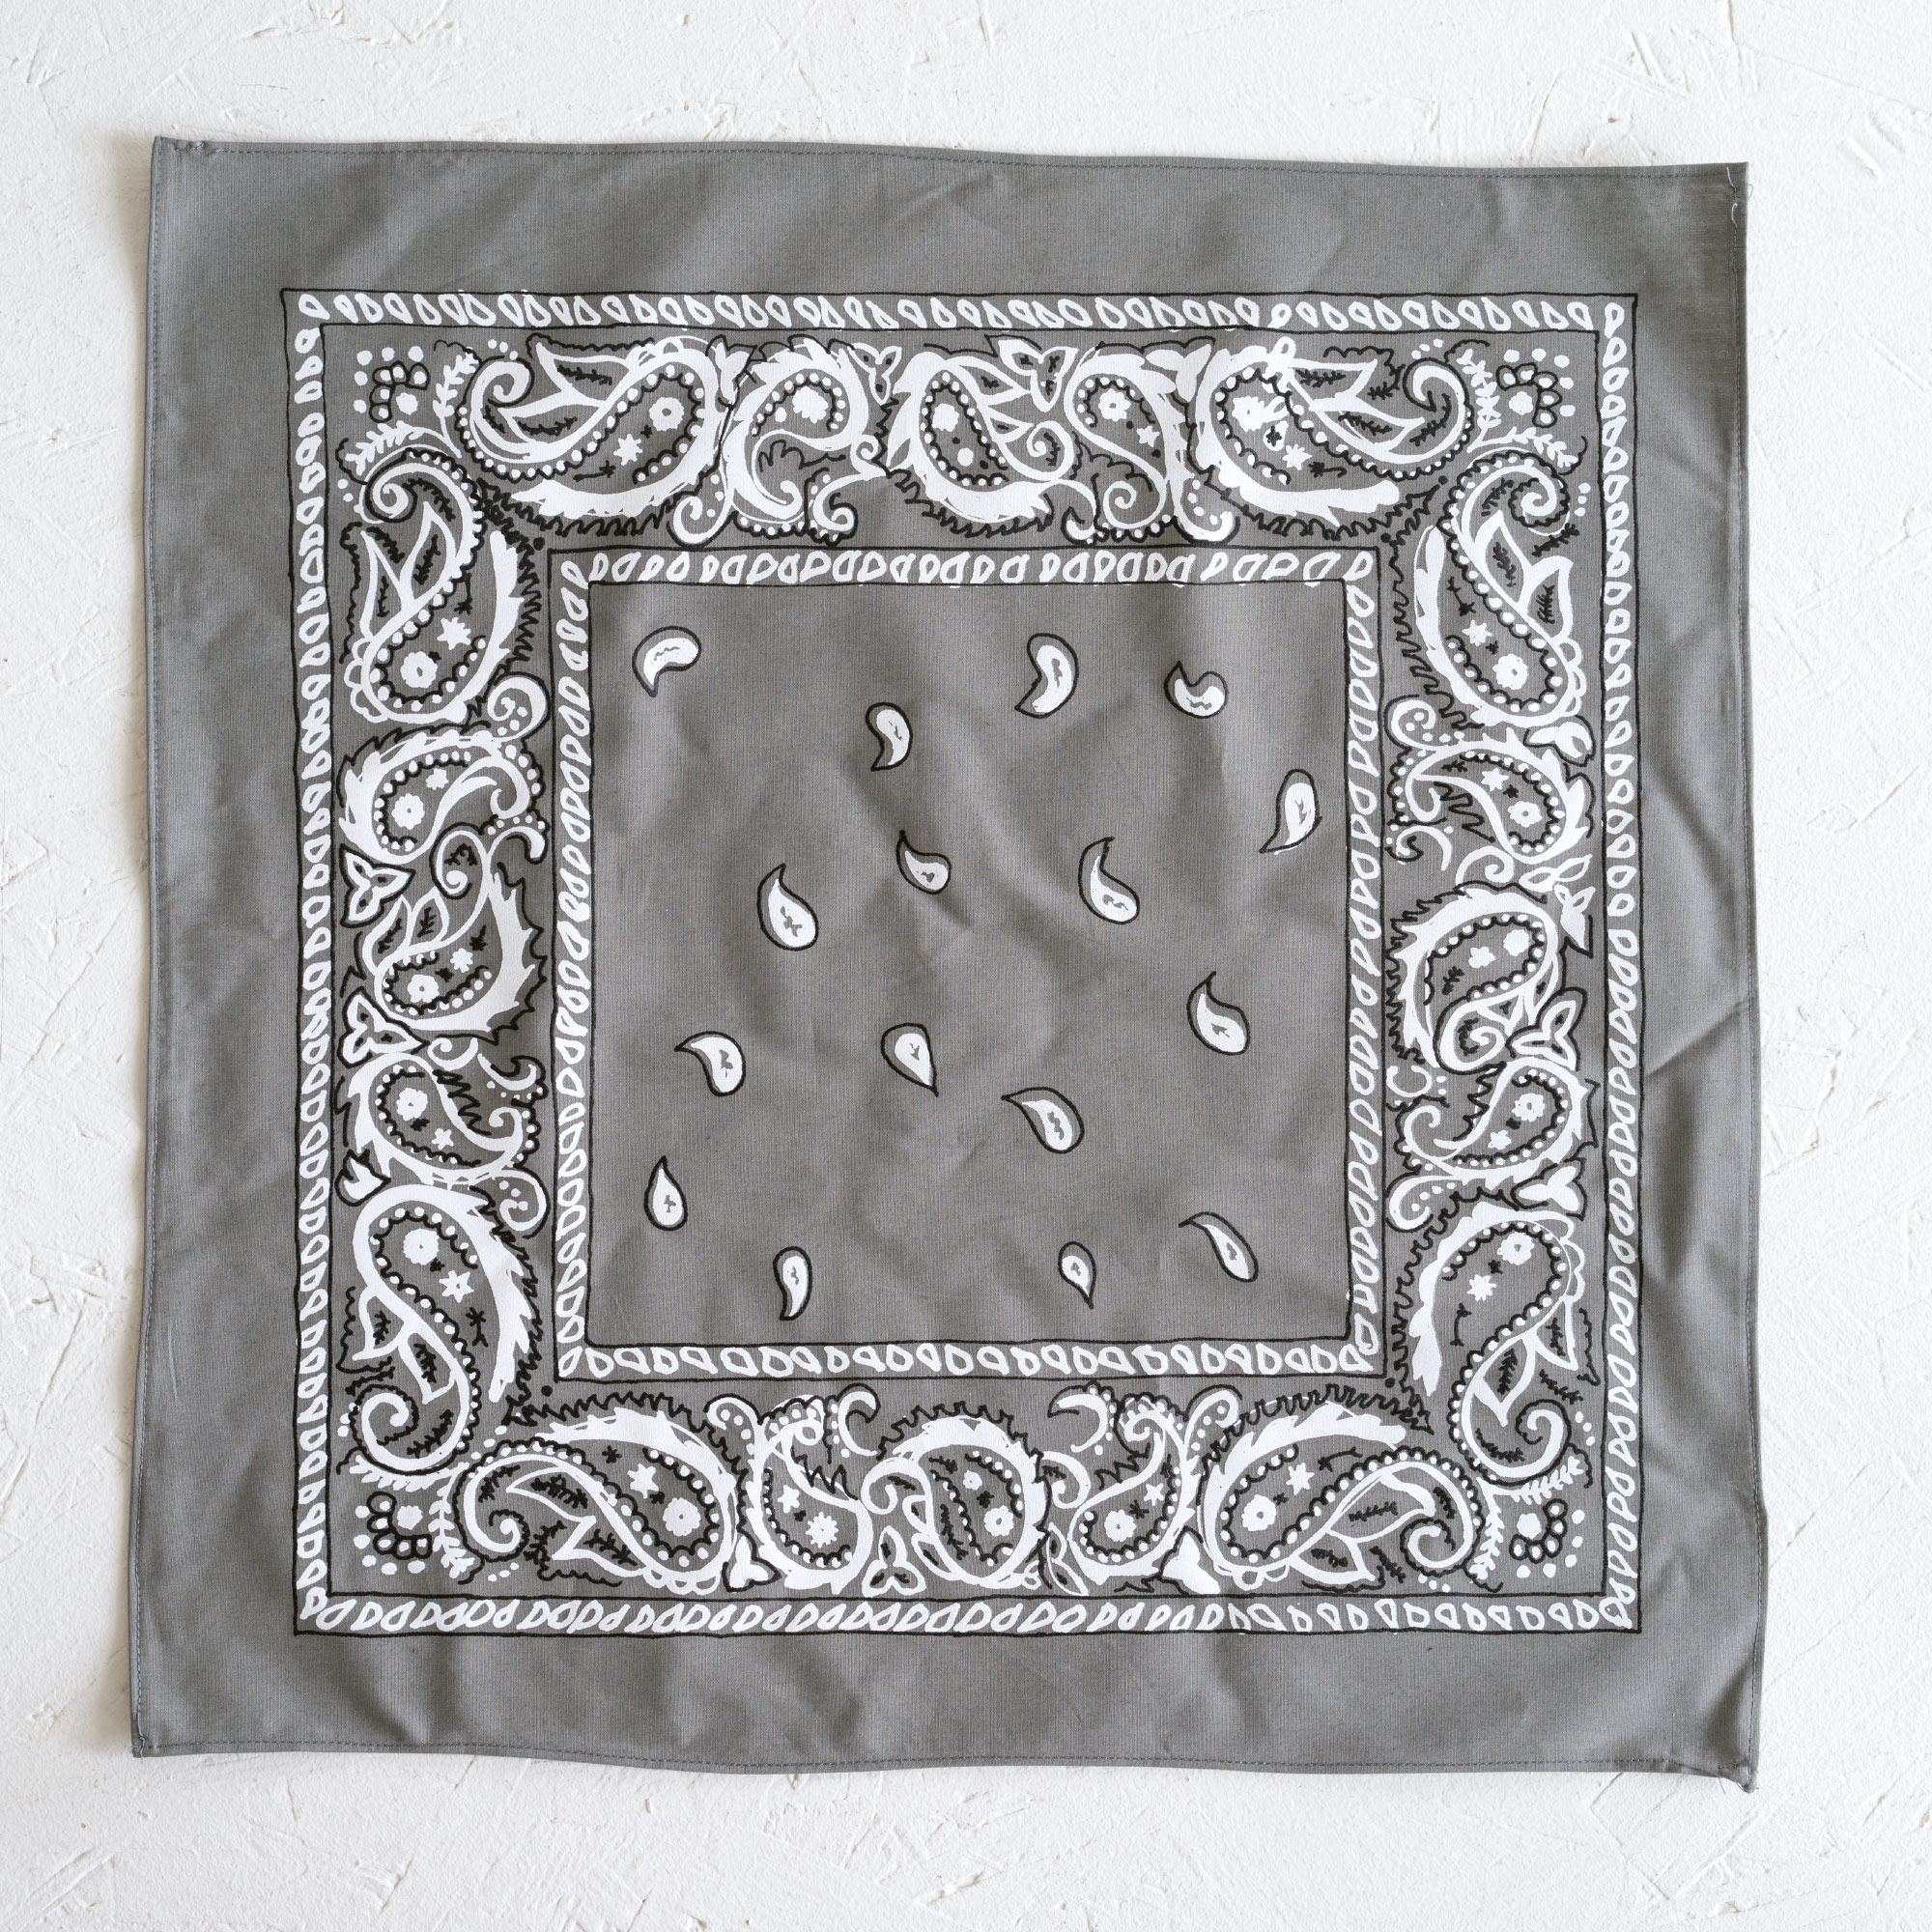 Nancy Davidson, *Hanky Code* (Grey), 2016, Two color silkscreen on hand cut & sewn cotton, 17 x 17 inches (43.18 x 43.18 cm)